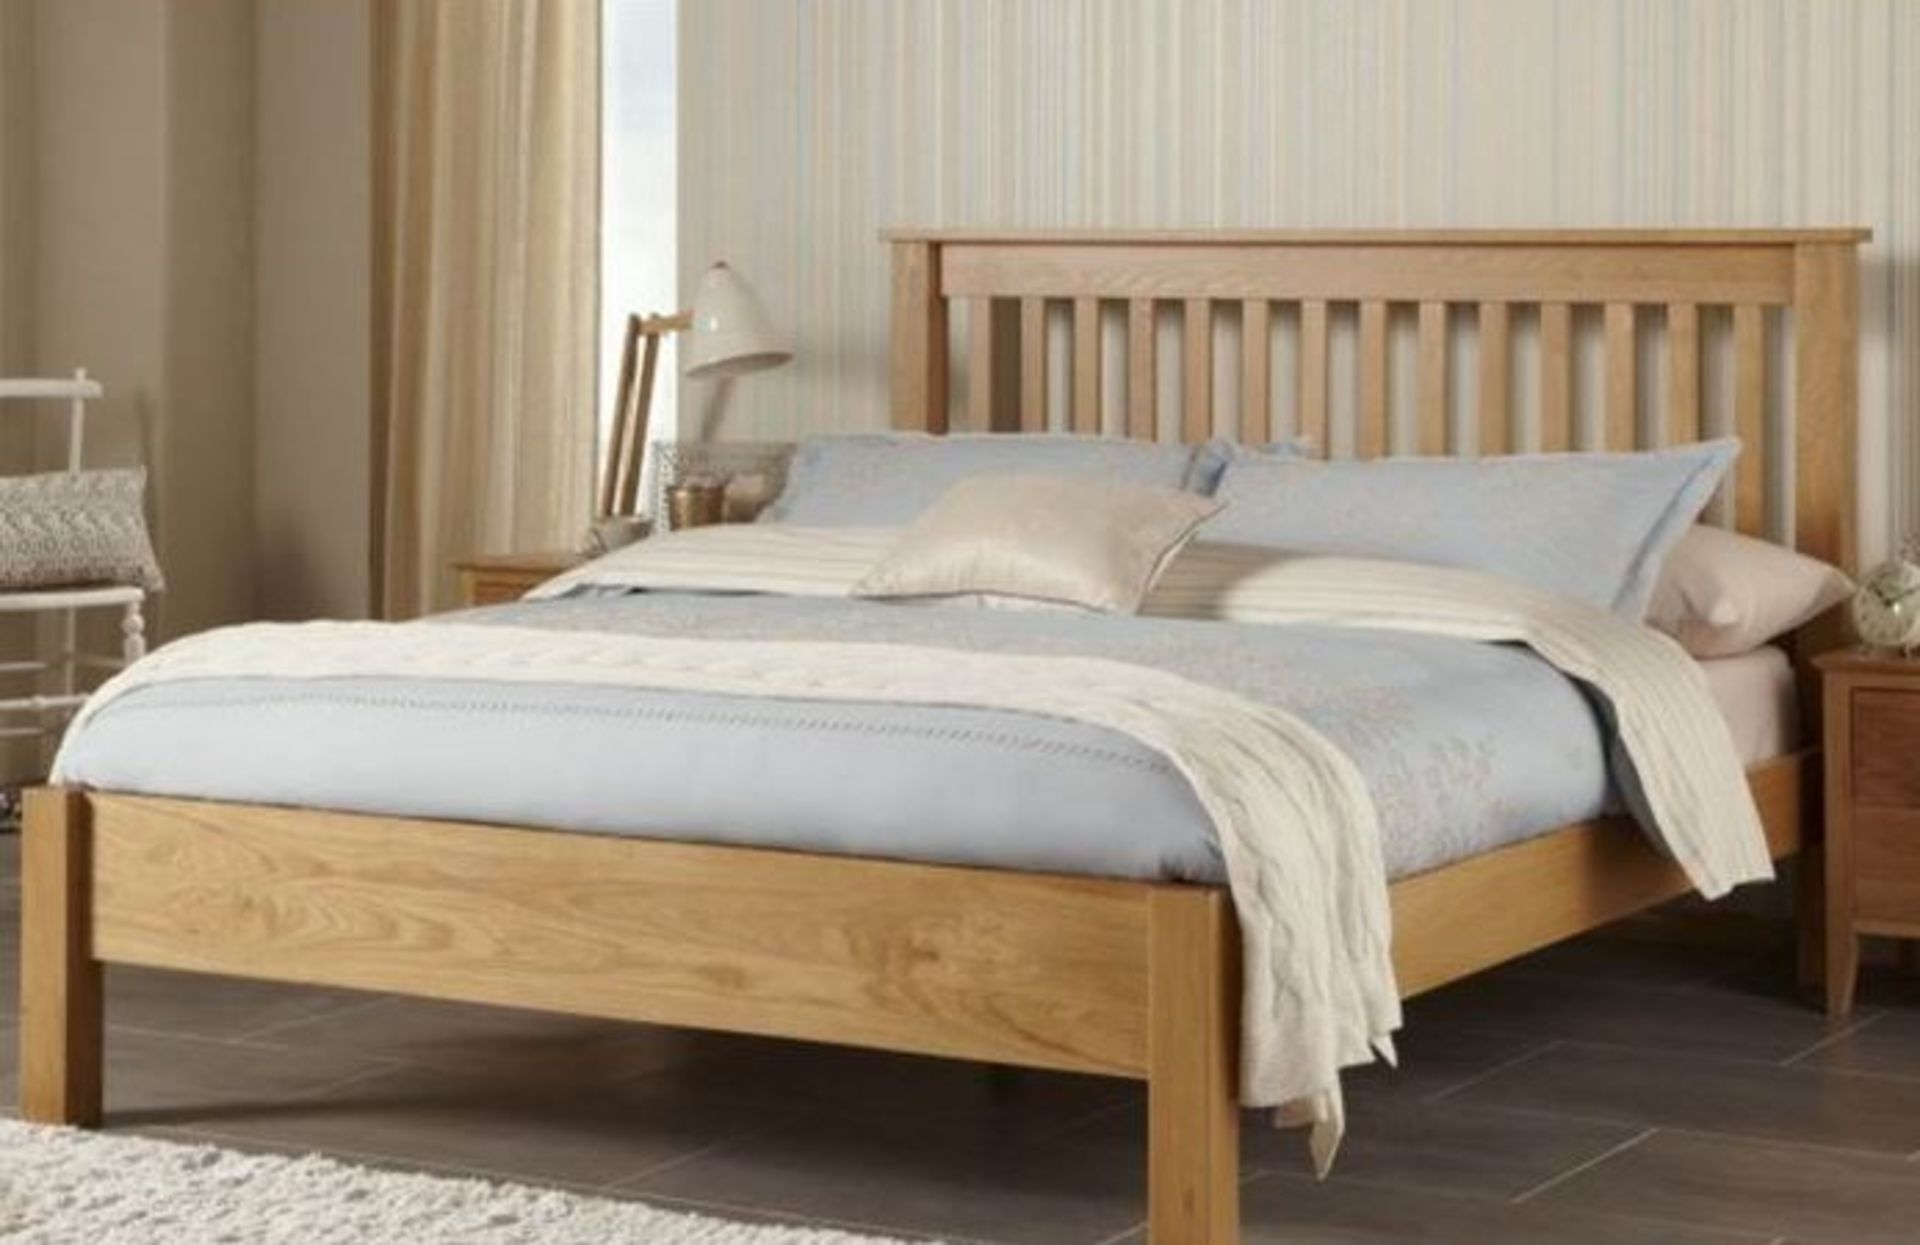 + VAT Brand New CS Designs "Windsor" Natural Oak King Size Bed Frame - Brand New Stunning Quality -